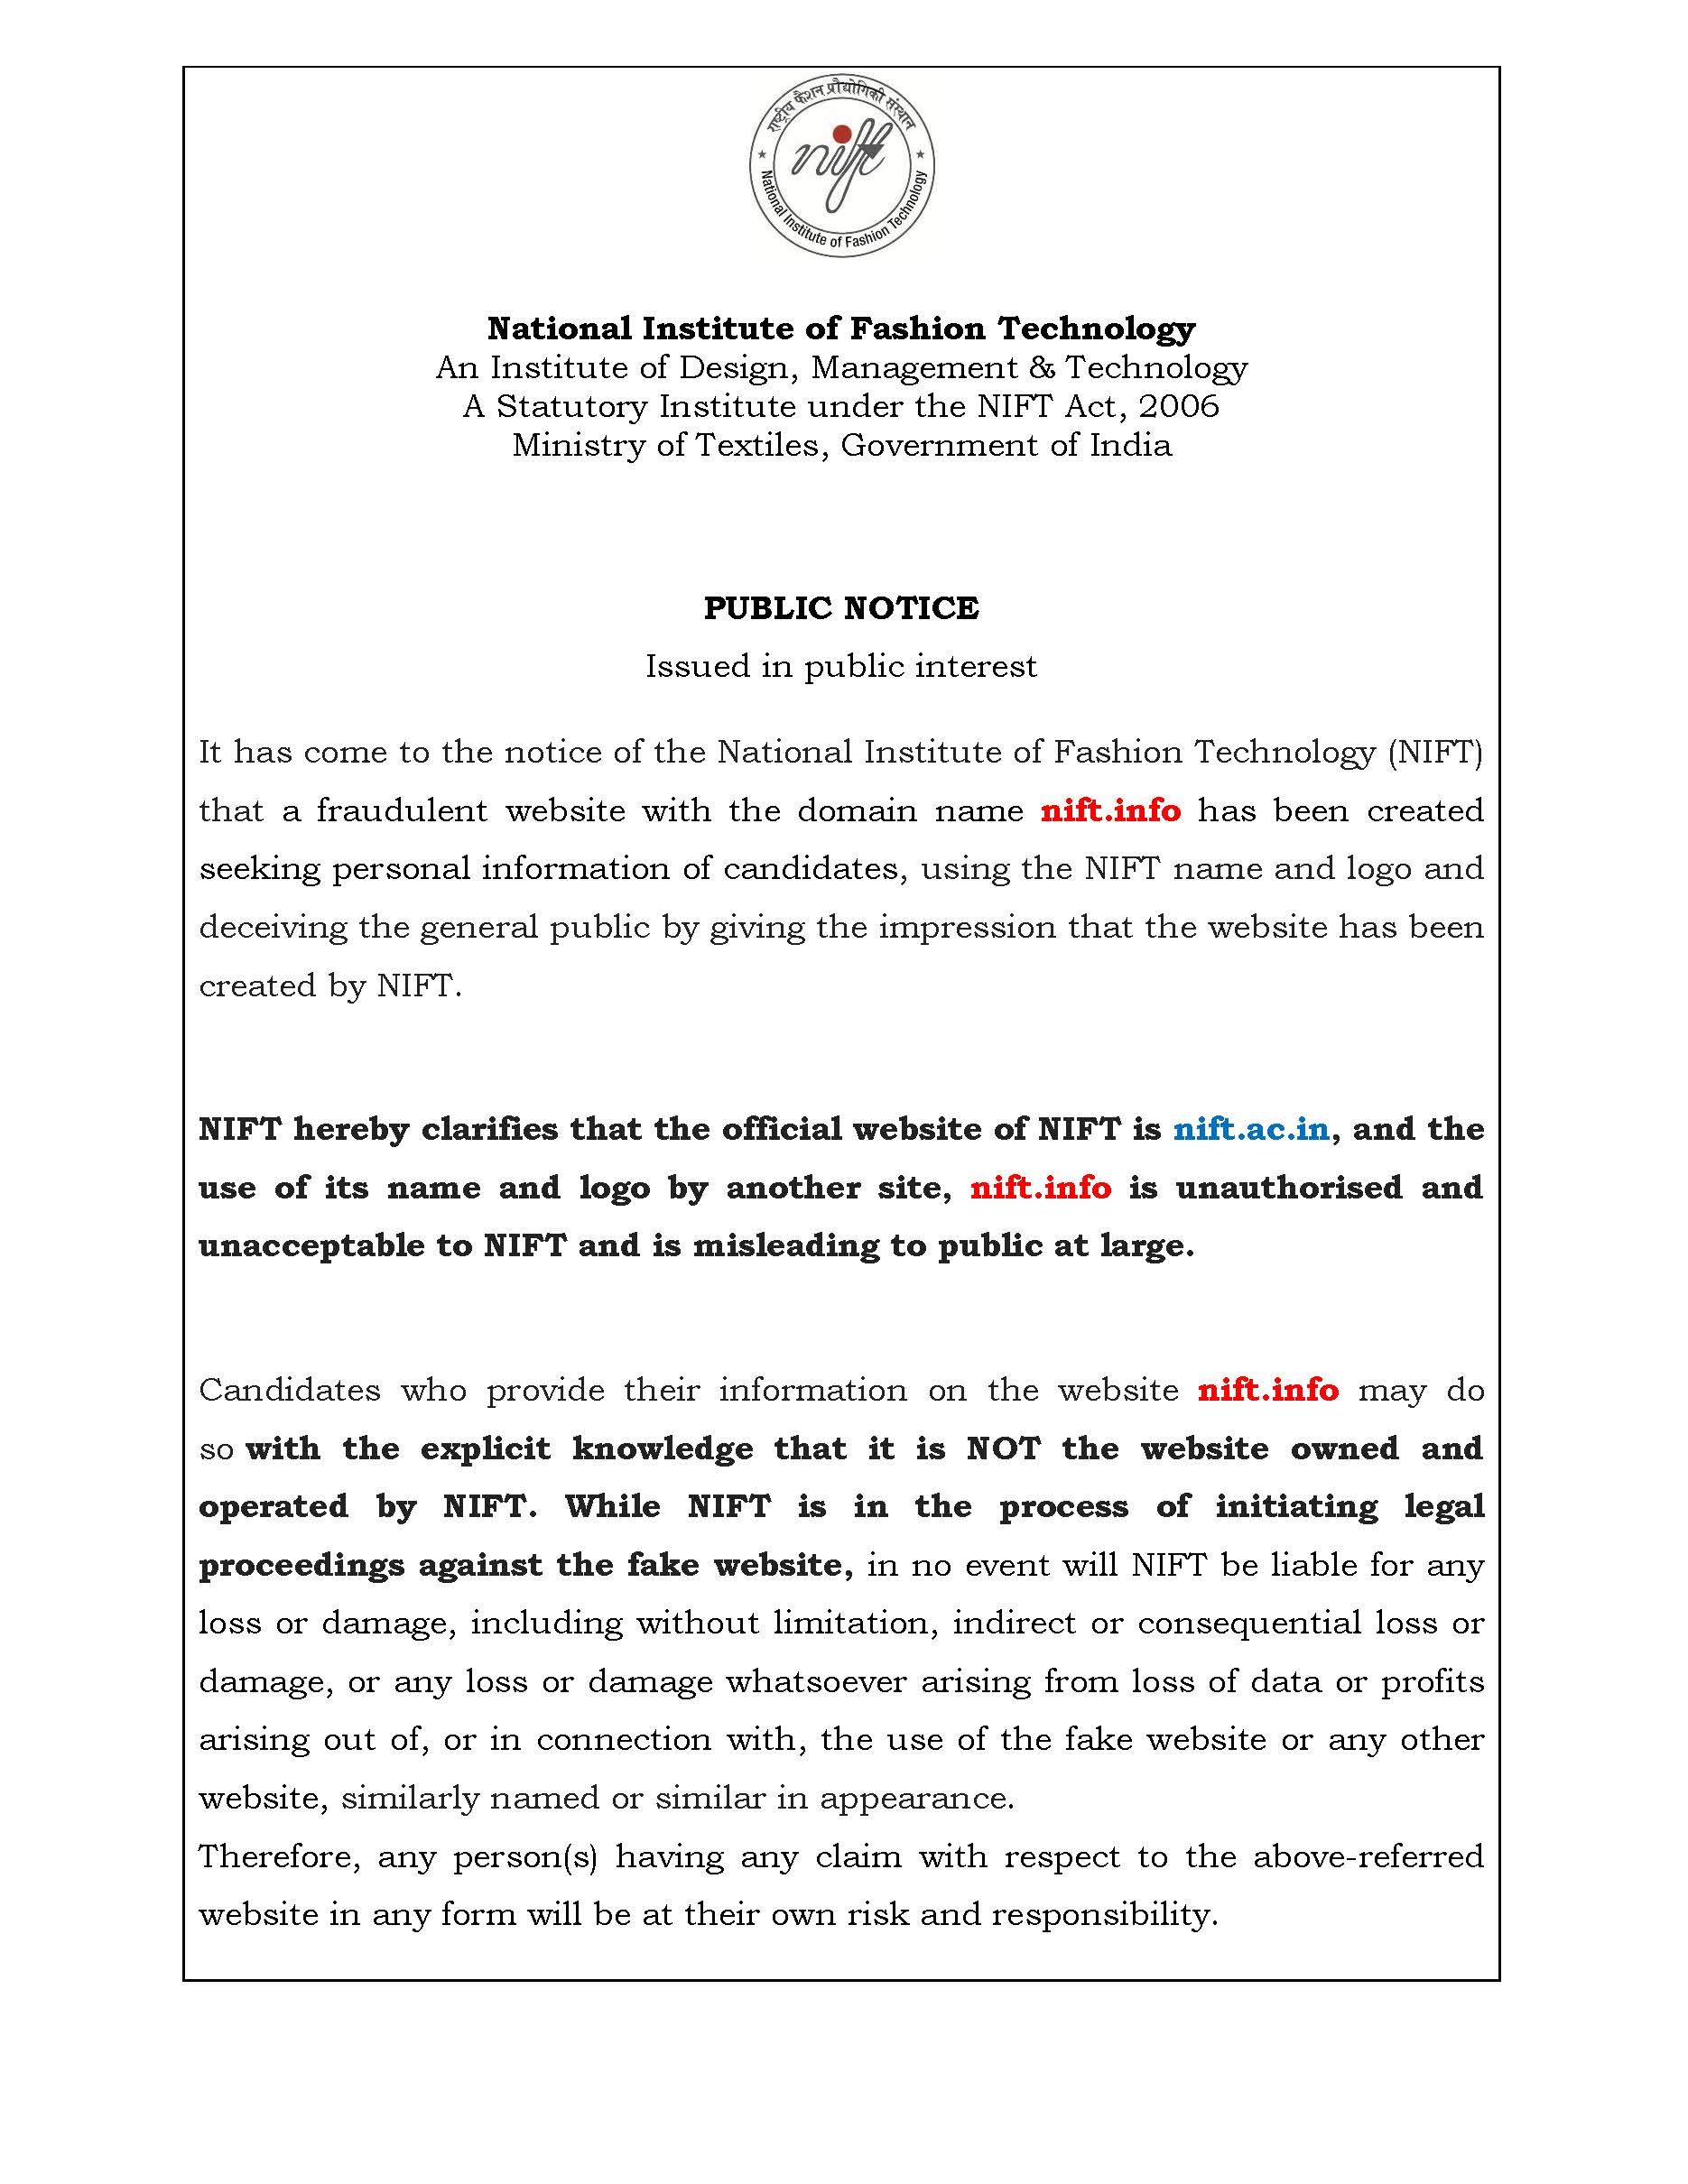 Public Notice regarding NIFT Website